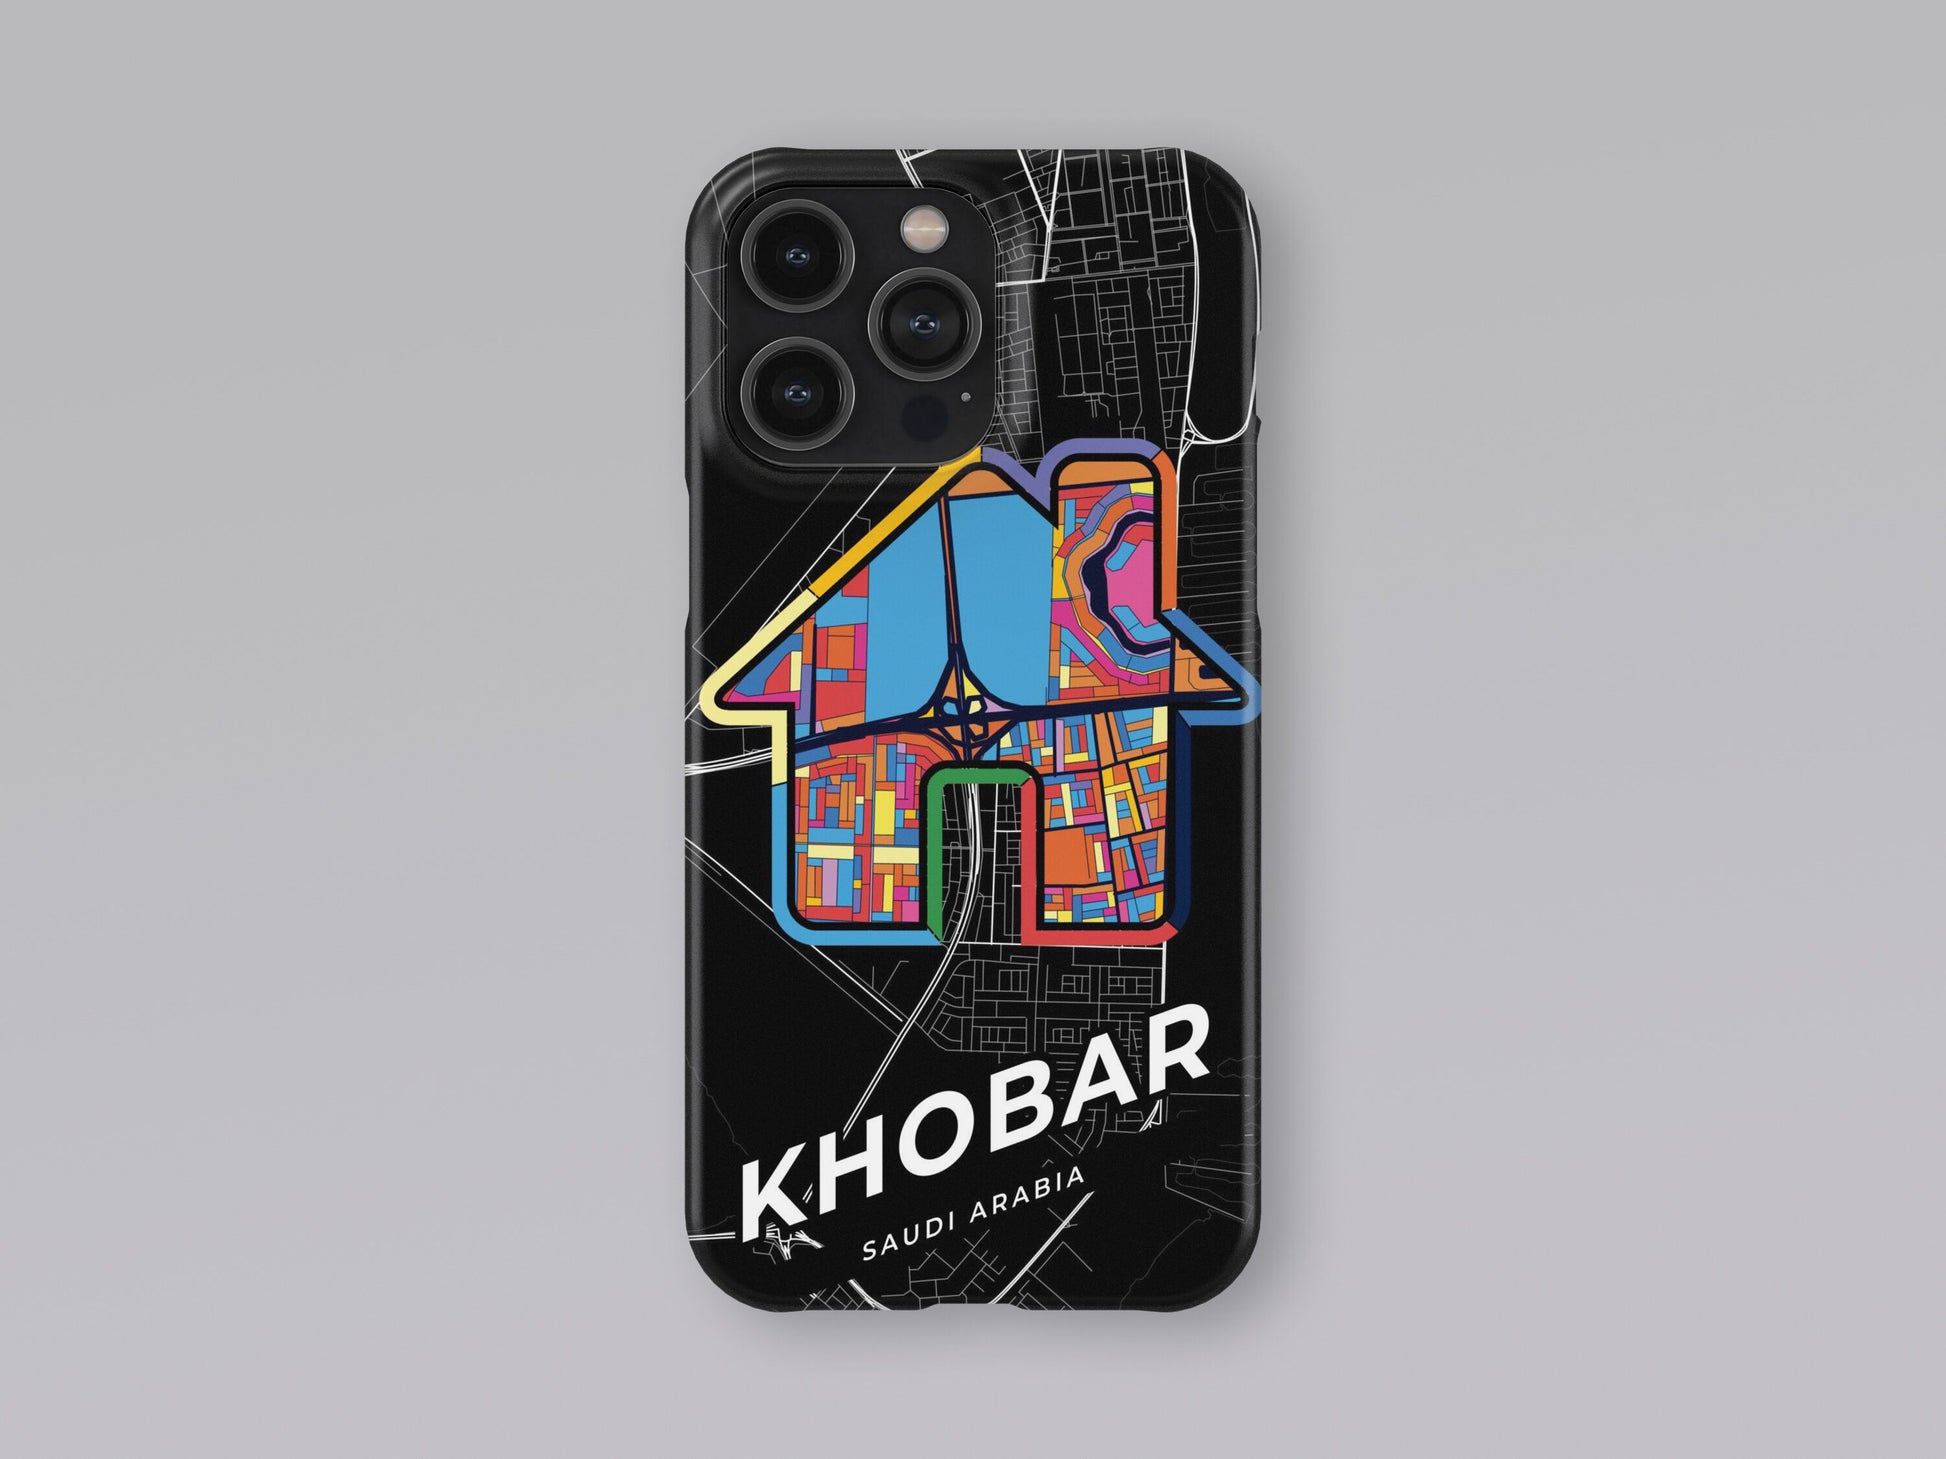 Khobar Saudi Arabia slim phone case with colorful icon. Birthday, wedding or housewarming gift. Couple match cases. 3